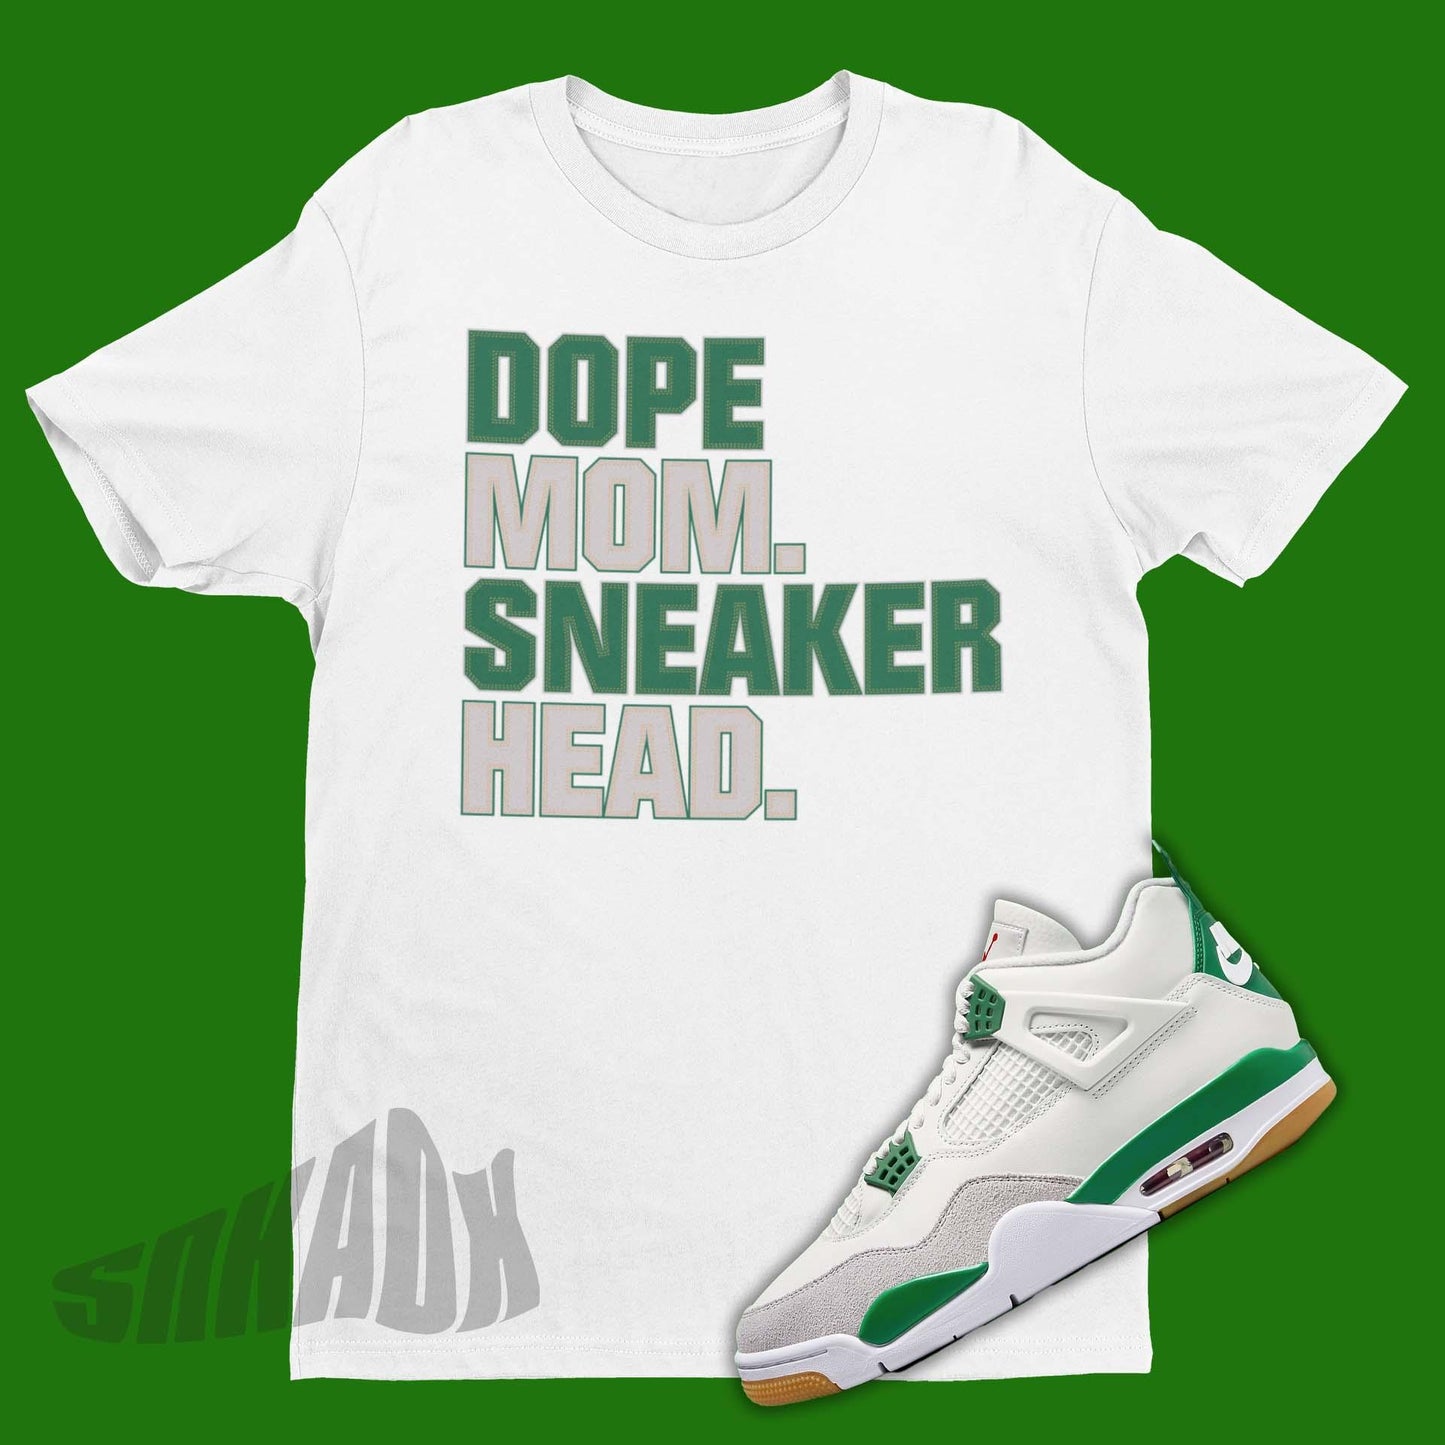 mom sneakerhead shirt air jordan 4 sb pine green